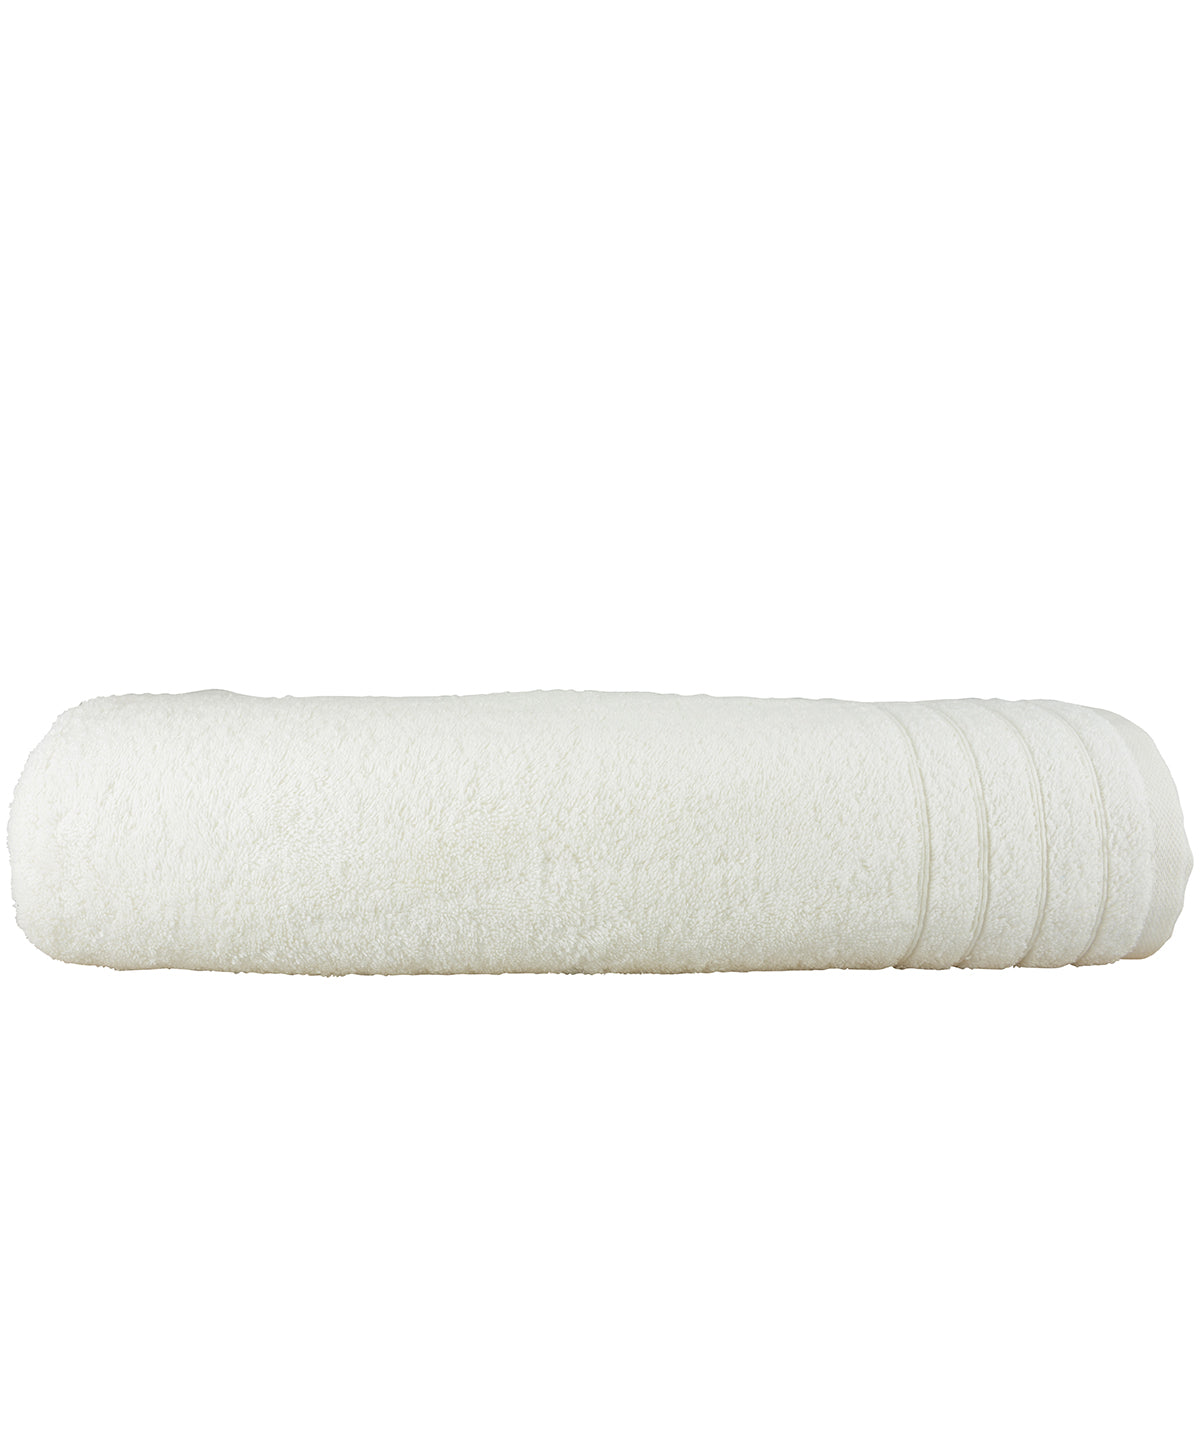 Personalised Towels - White A&R Towels ARTG® Organic beach towel